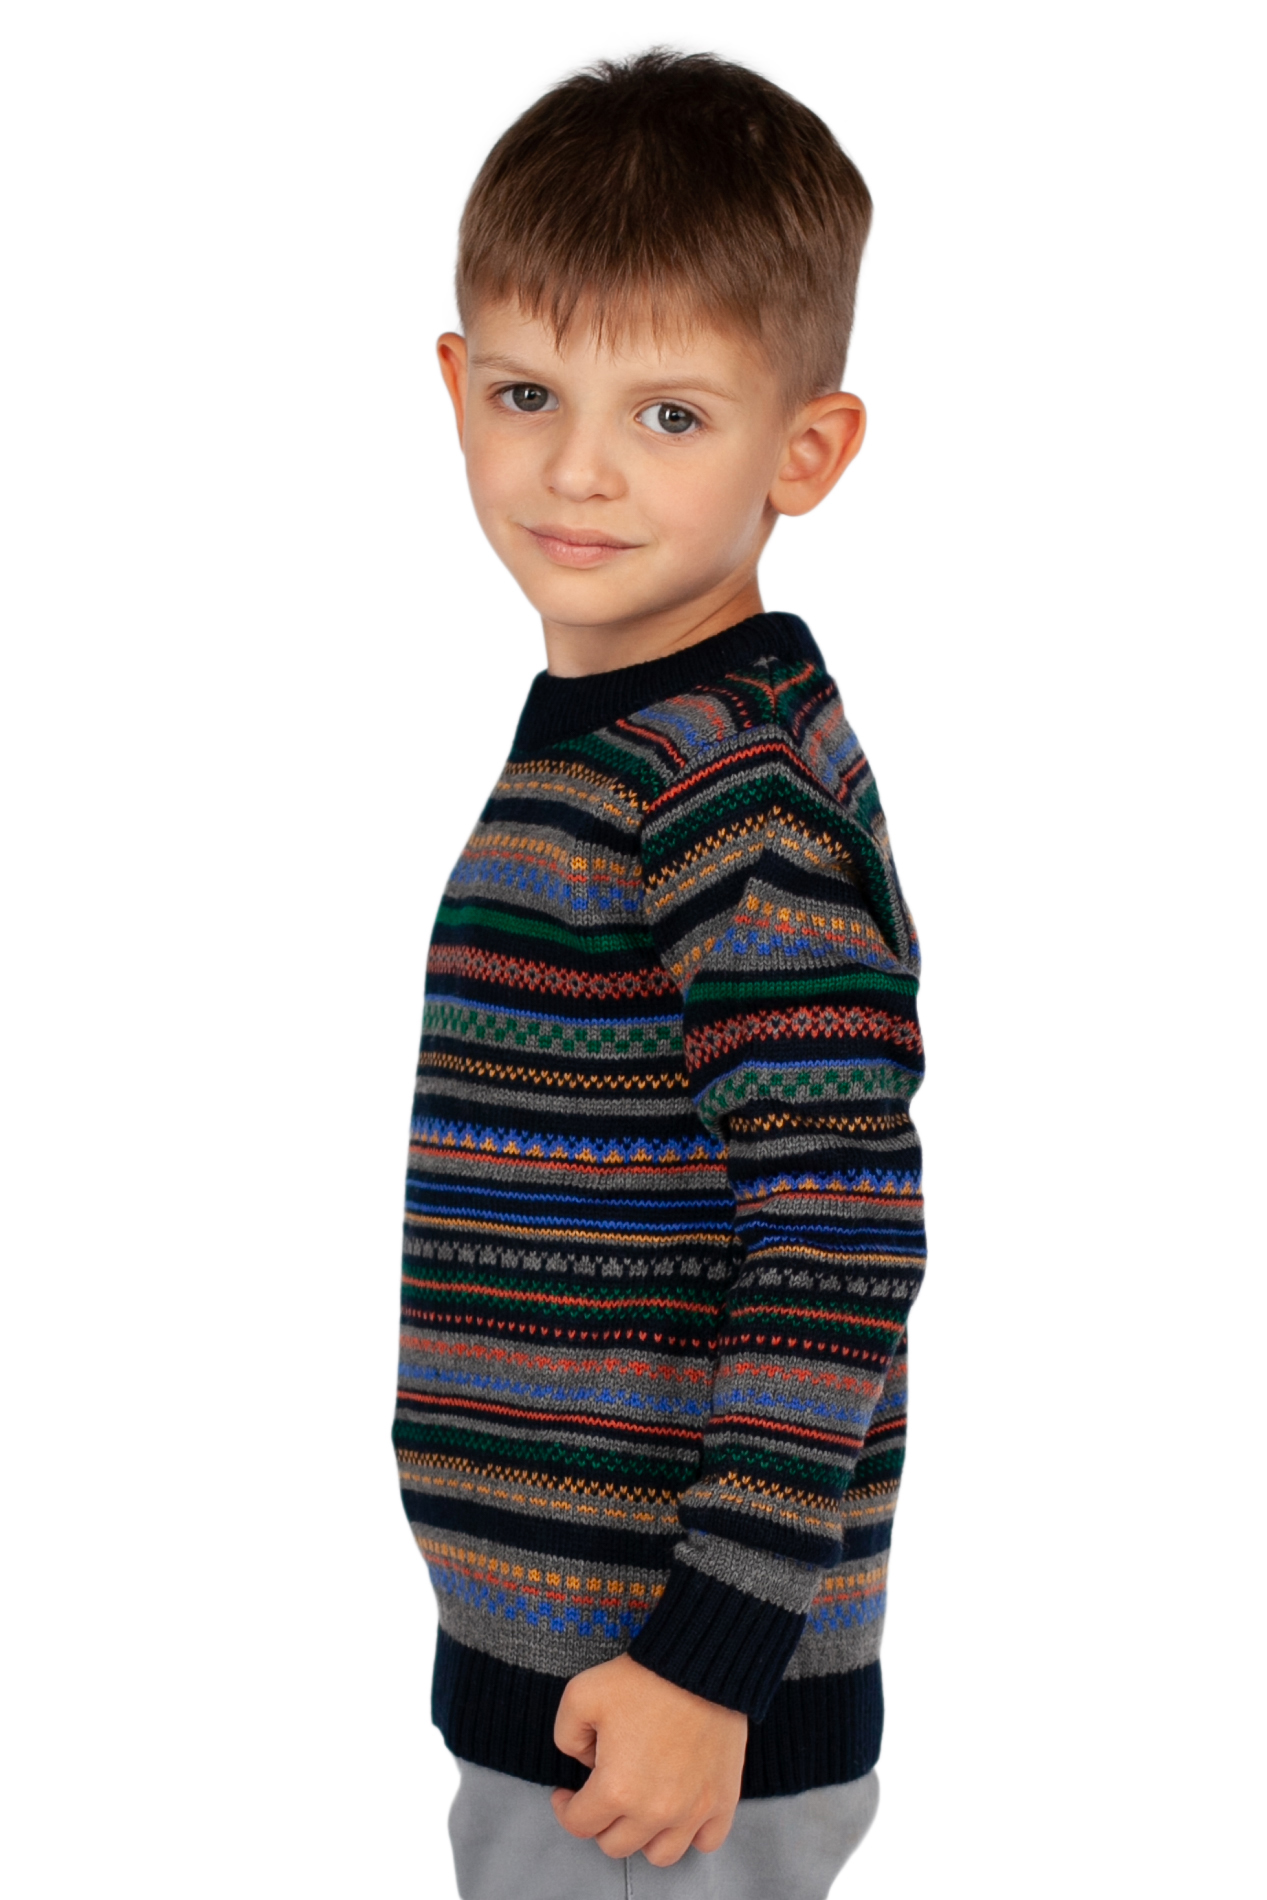 Джемпер для мальчика (арт. baon BK638504), размер 98-104, цвет multicolor#многоцветный Джемпер для мальчика (арт. baon BK638504) - фото 1